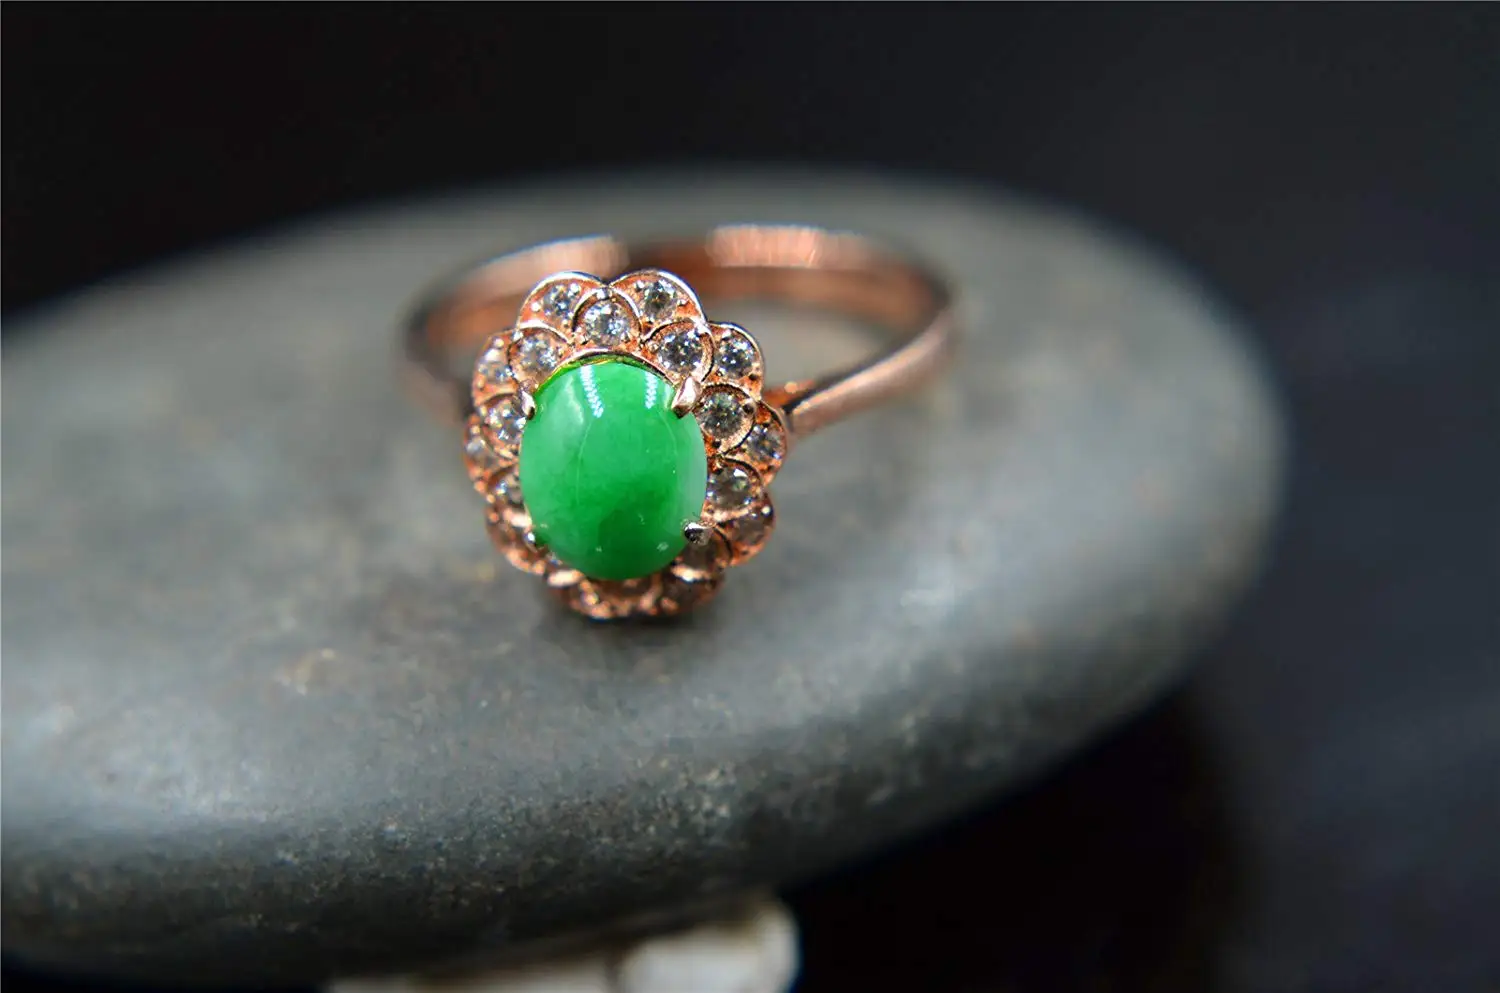 peach Jade ring,vintage ring,orange ring,dark stone ring,gold ring,solid gold ring,oval rings